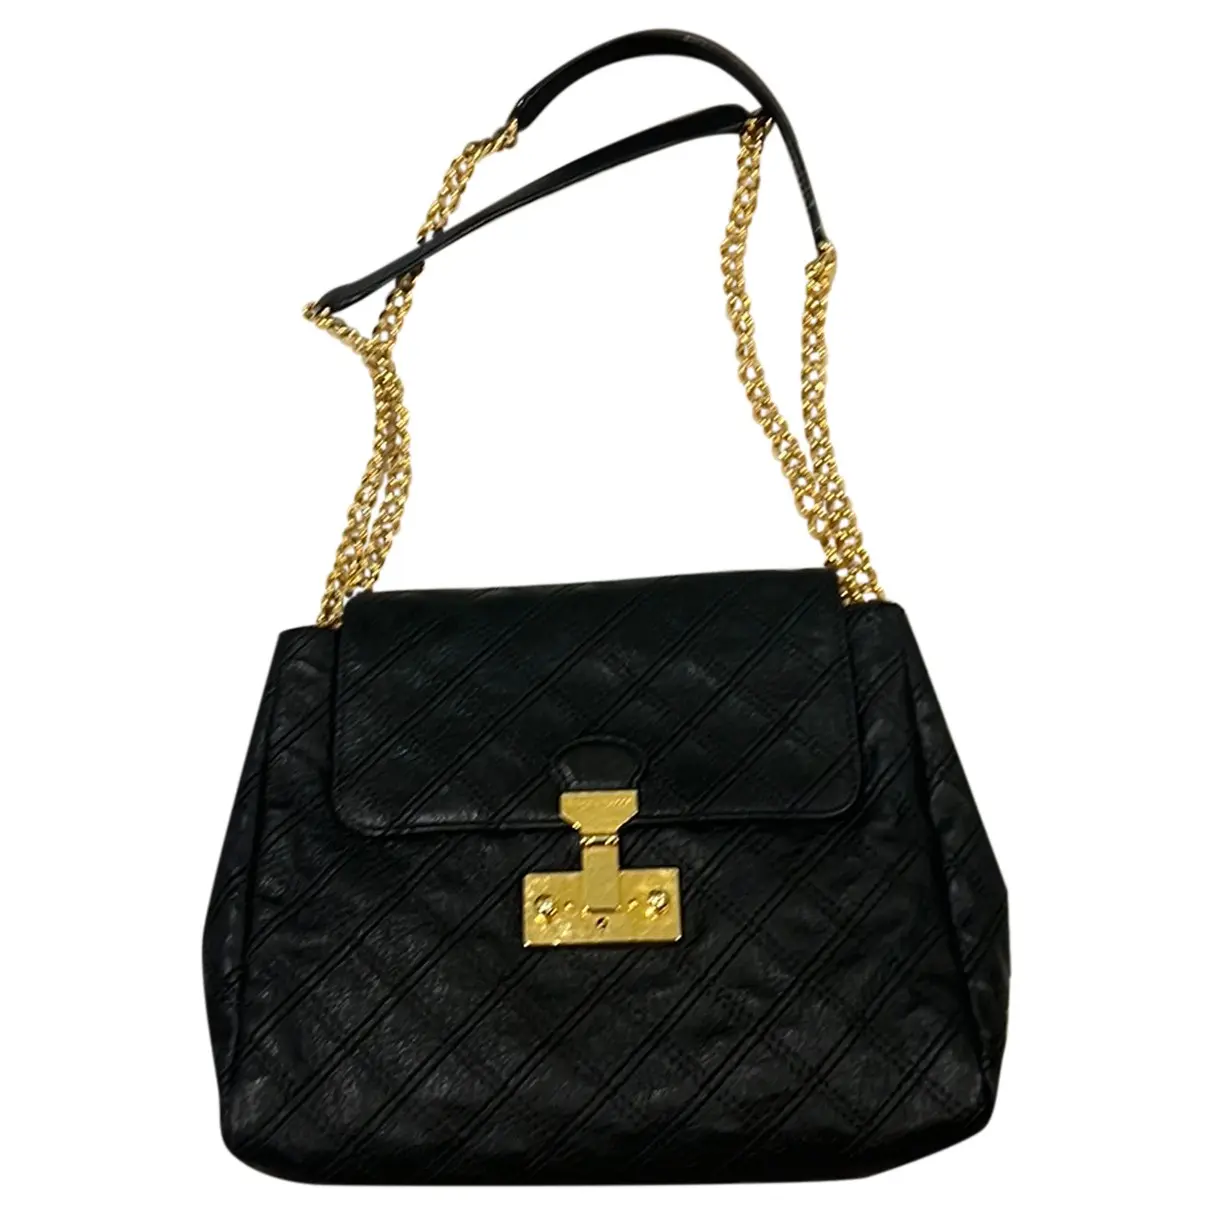 Single leather handbag Marc Jacobs